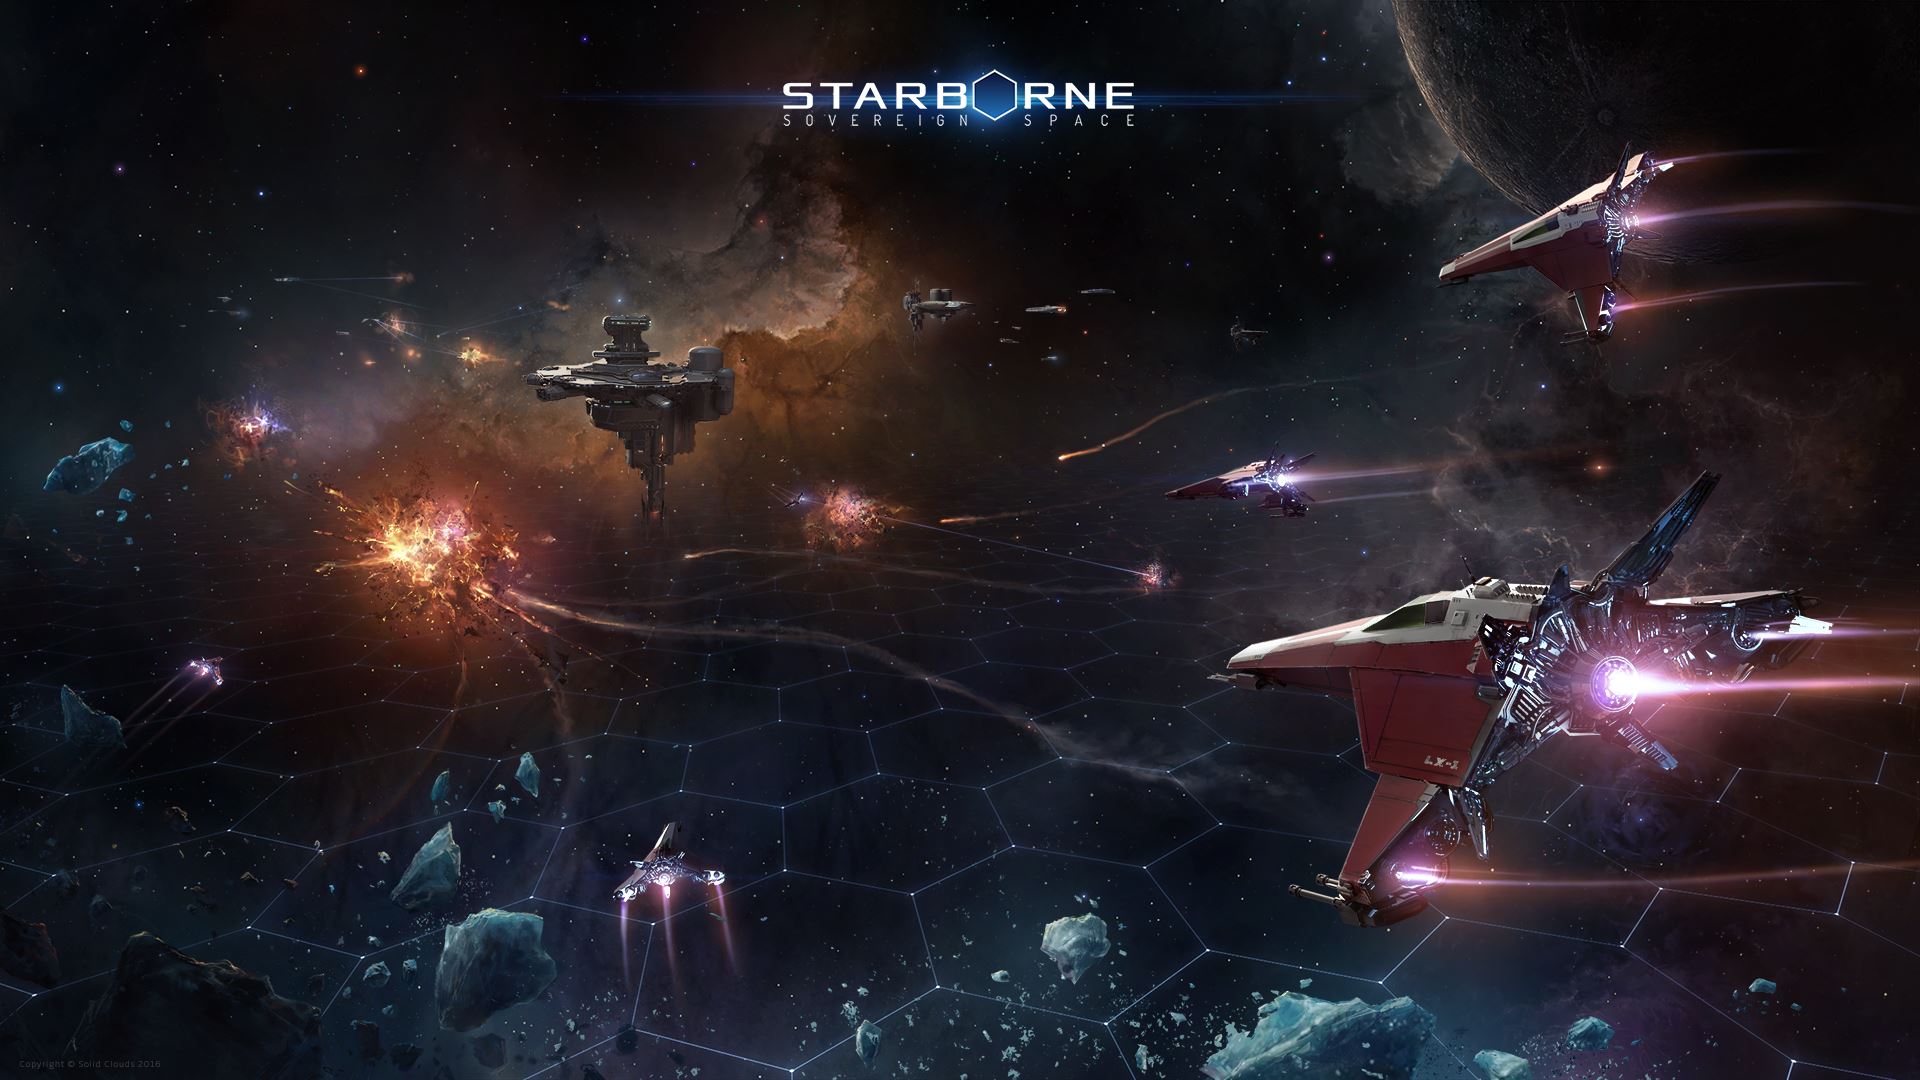 Starborne : Sovereign space